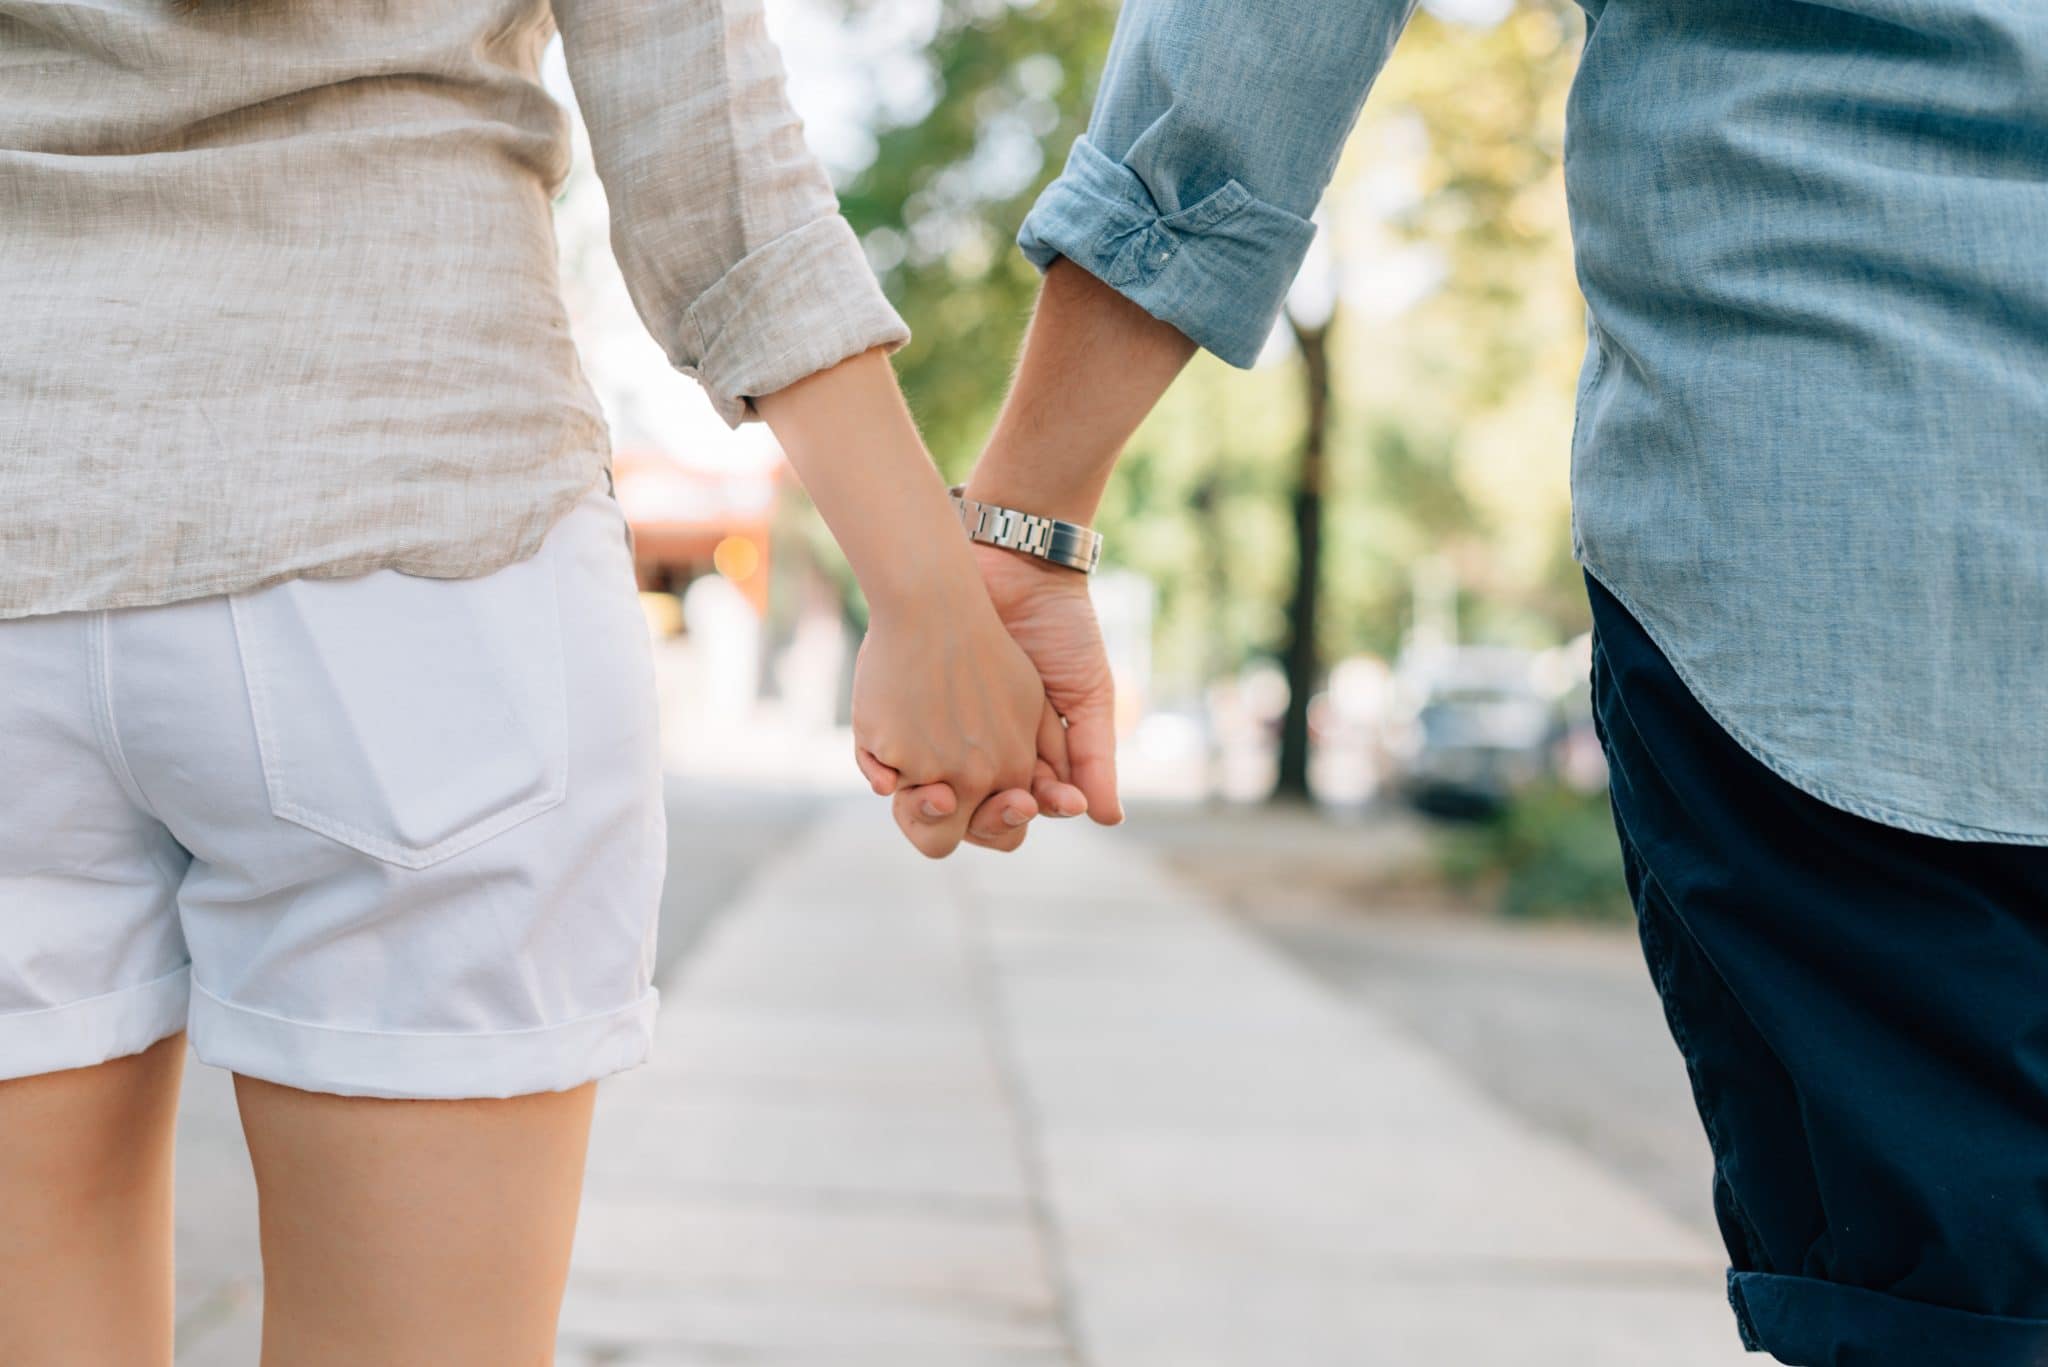 Dating website ranks Georgia number 5 for STDs